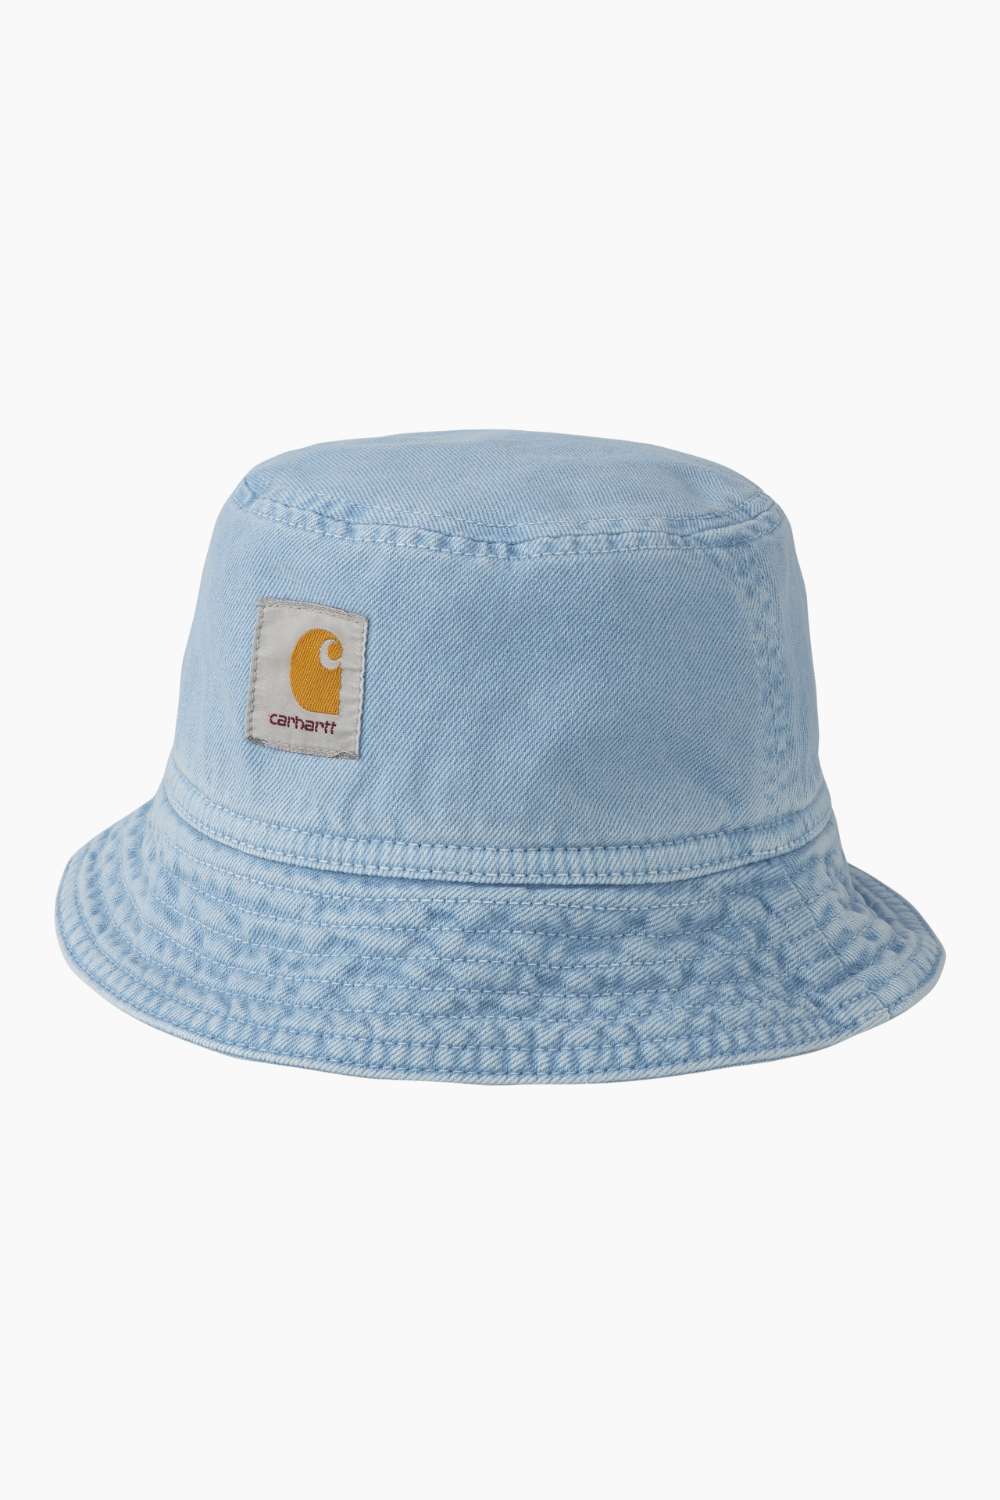 Garrison Bucket Hat - Frosted Blue (Stone Dyed) - Carhartt WIP - Blå M/L